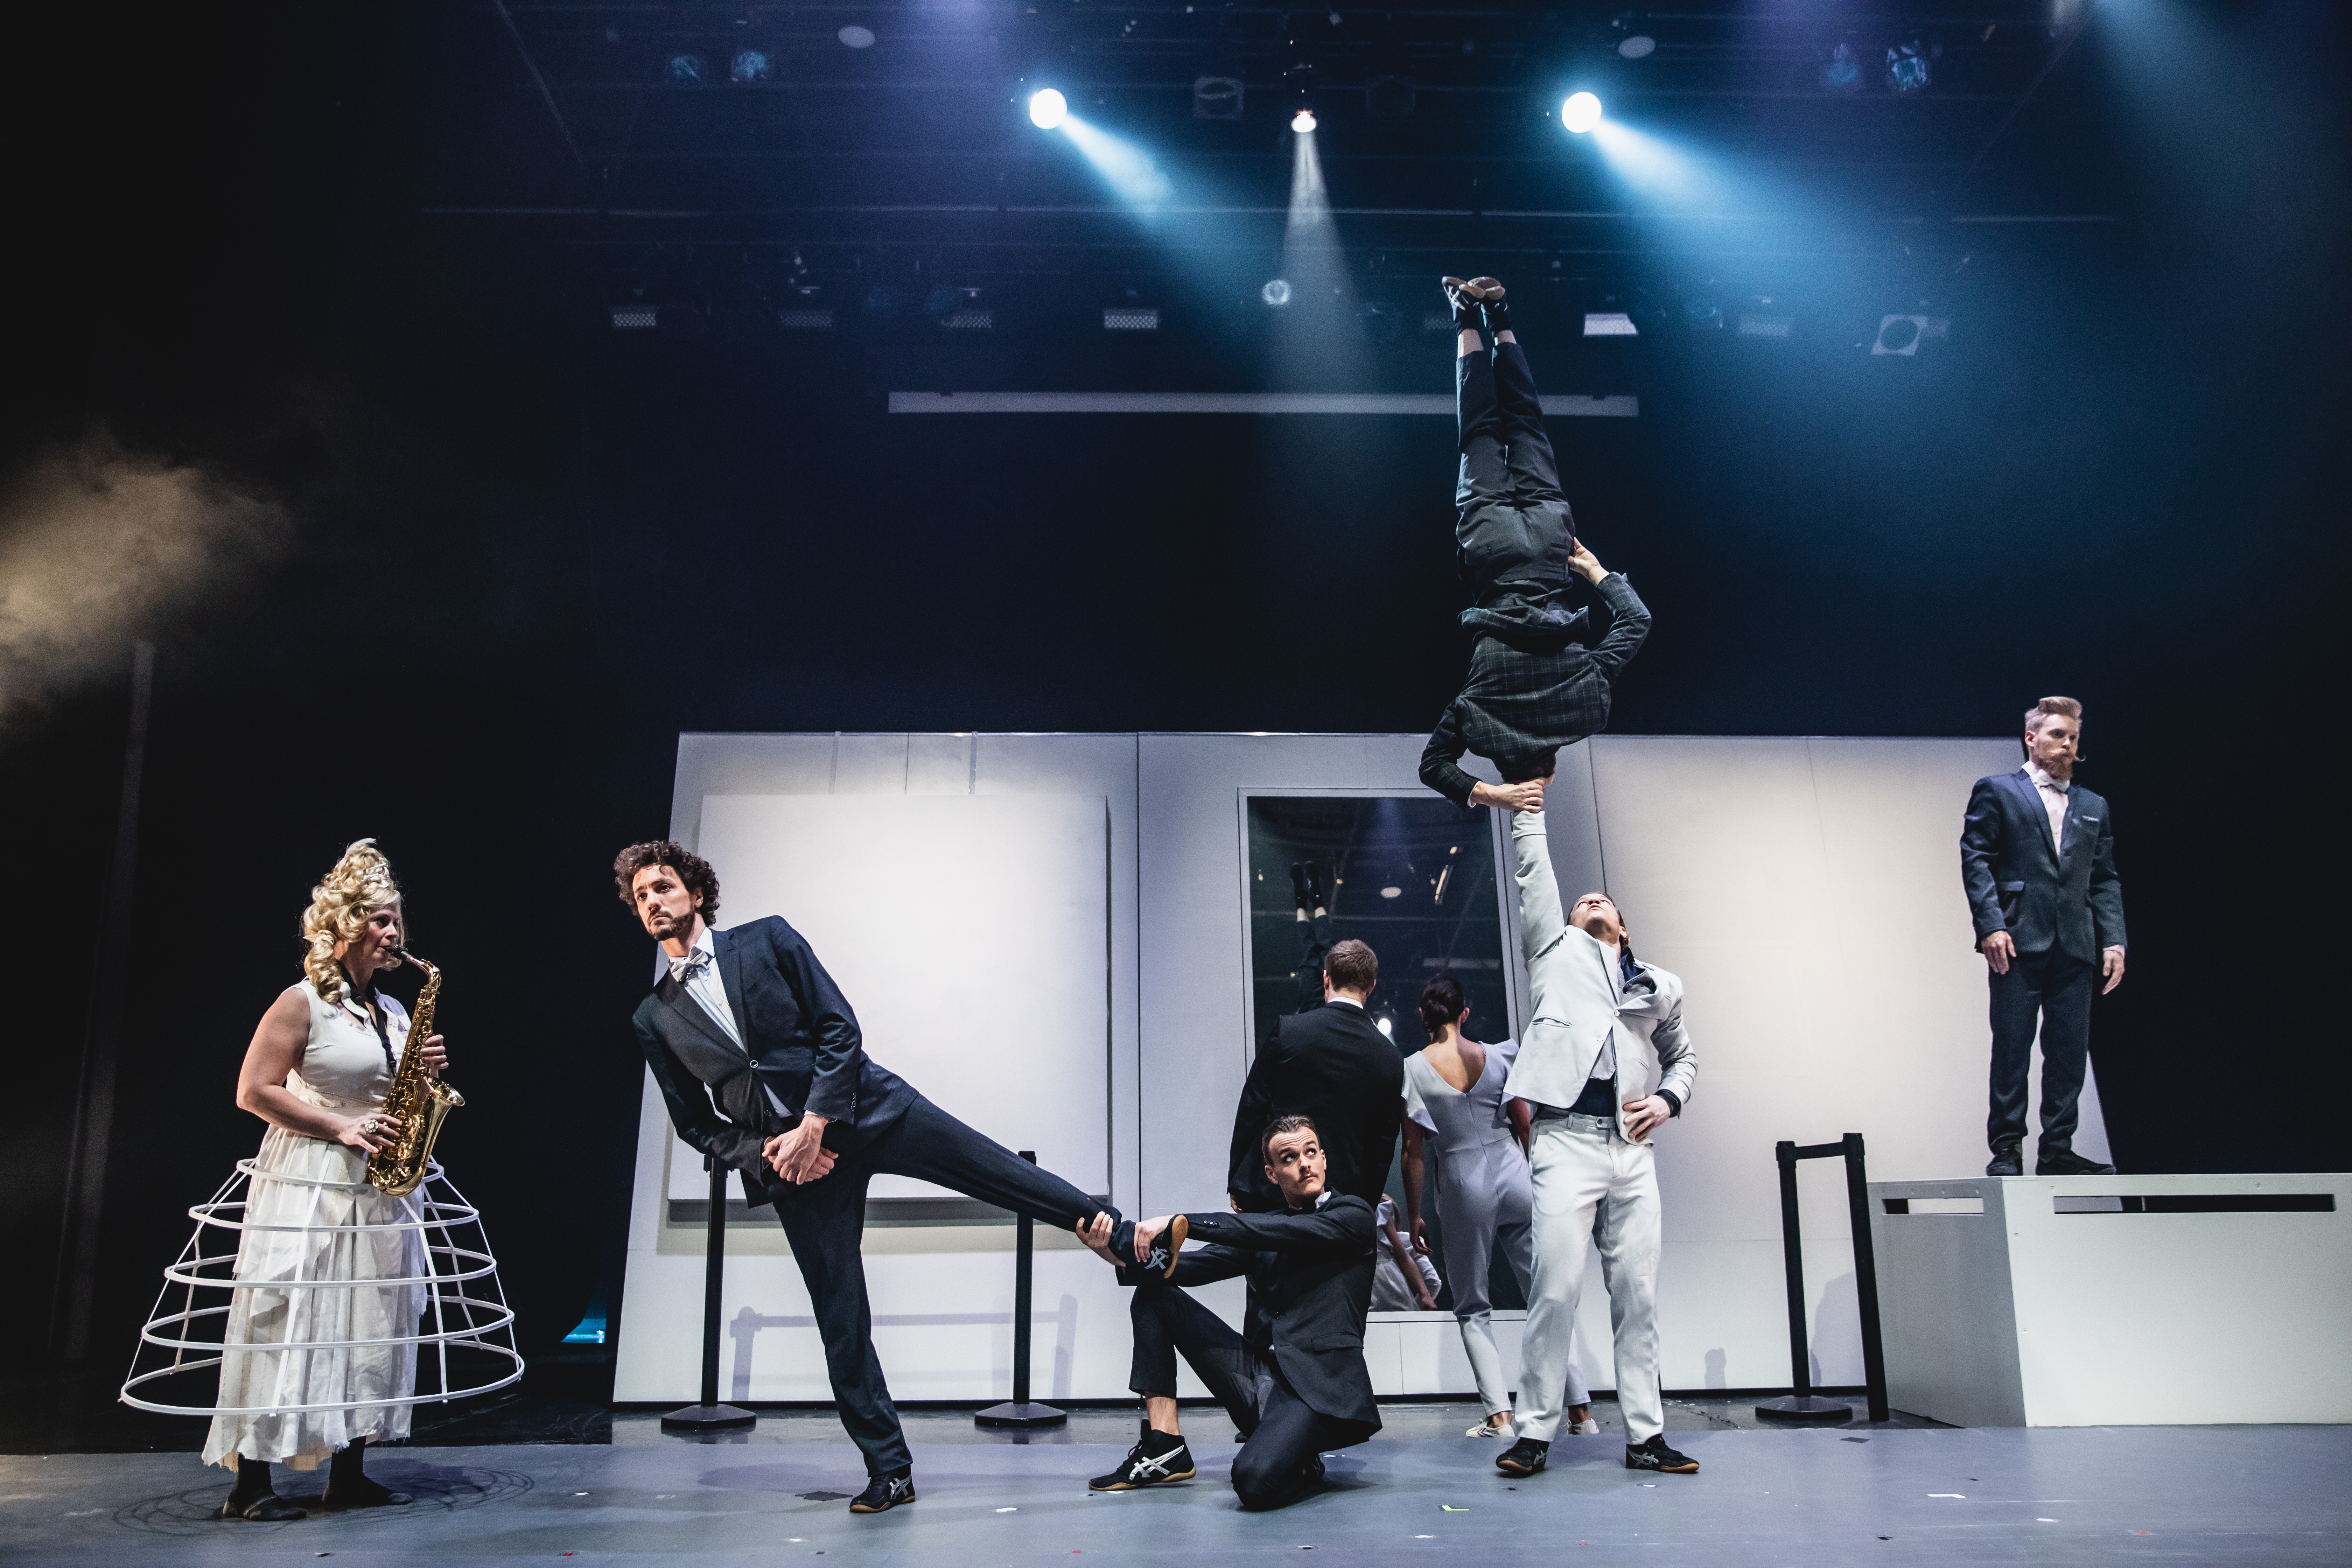 Acrobatic performers on stage 